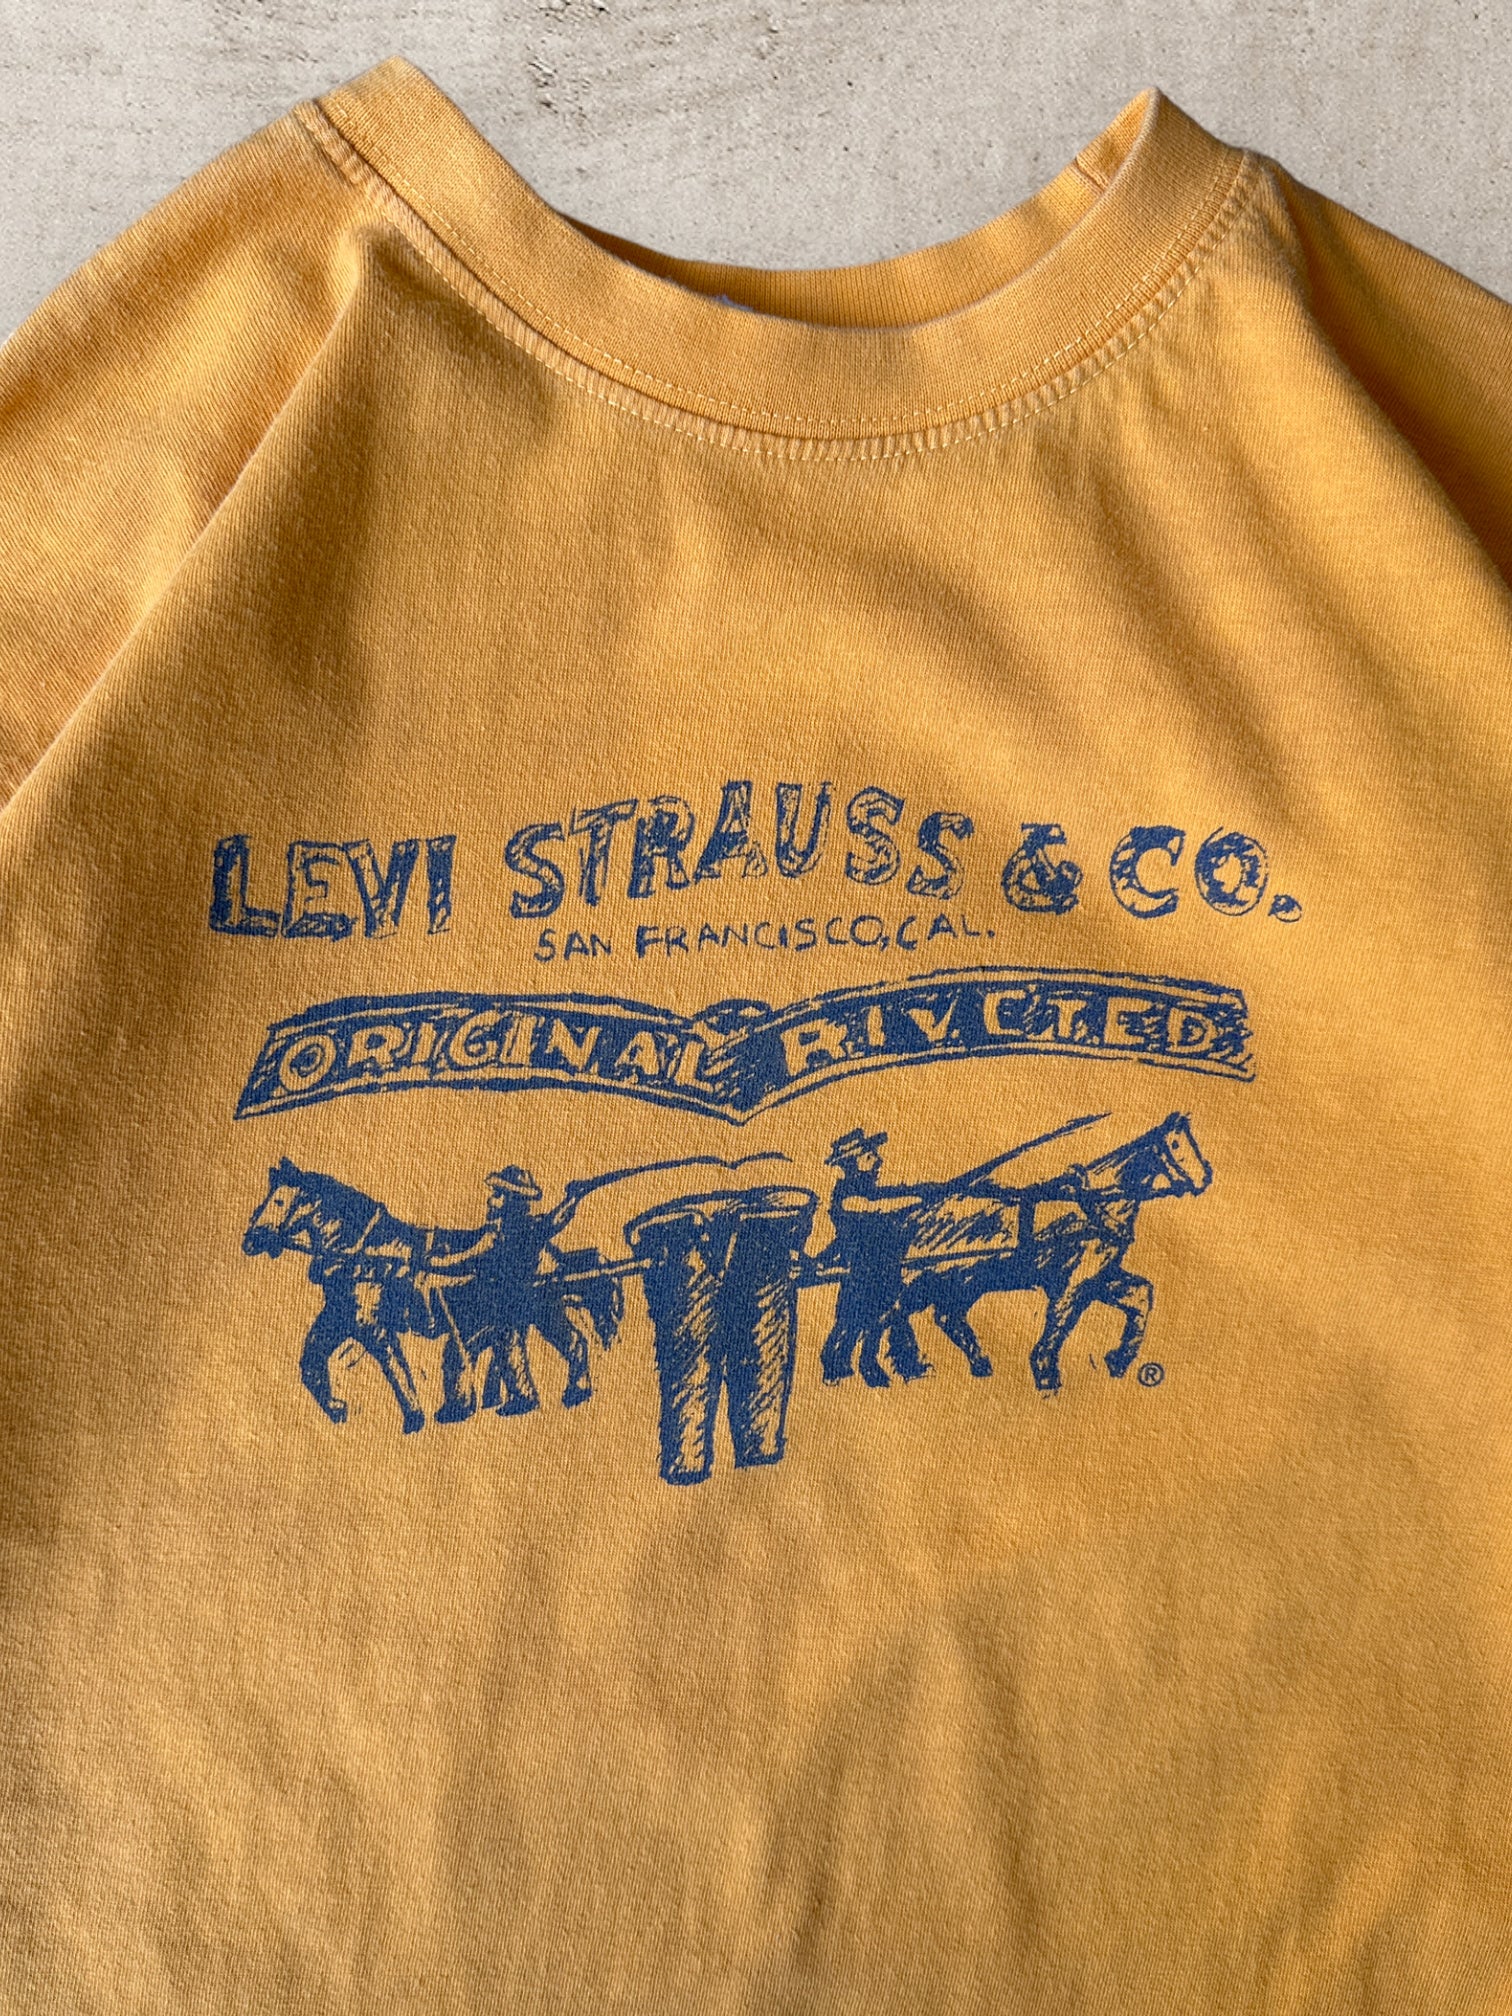 00s Bootleg Levi’s Strauss Logo T-Shirt - Small